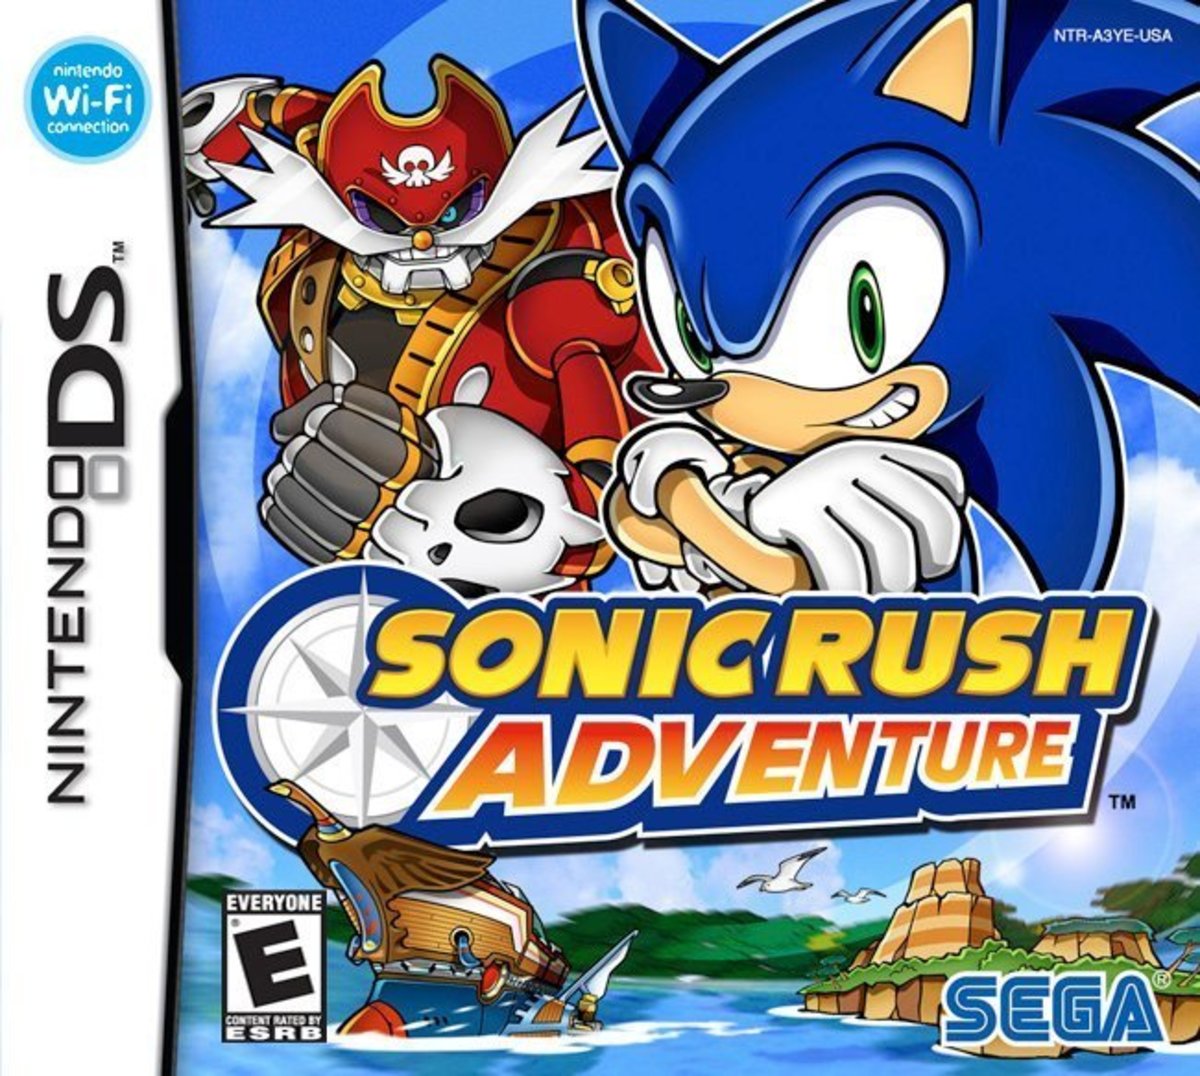 "Sonic Rush Adventure" Cover Art